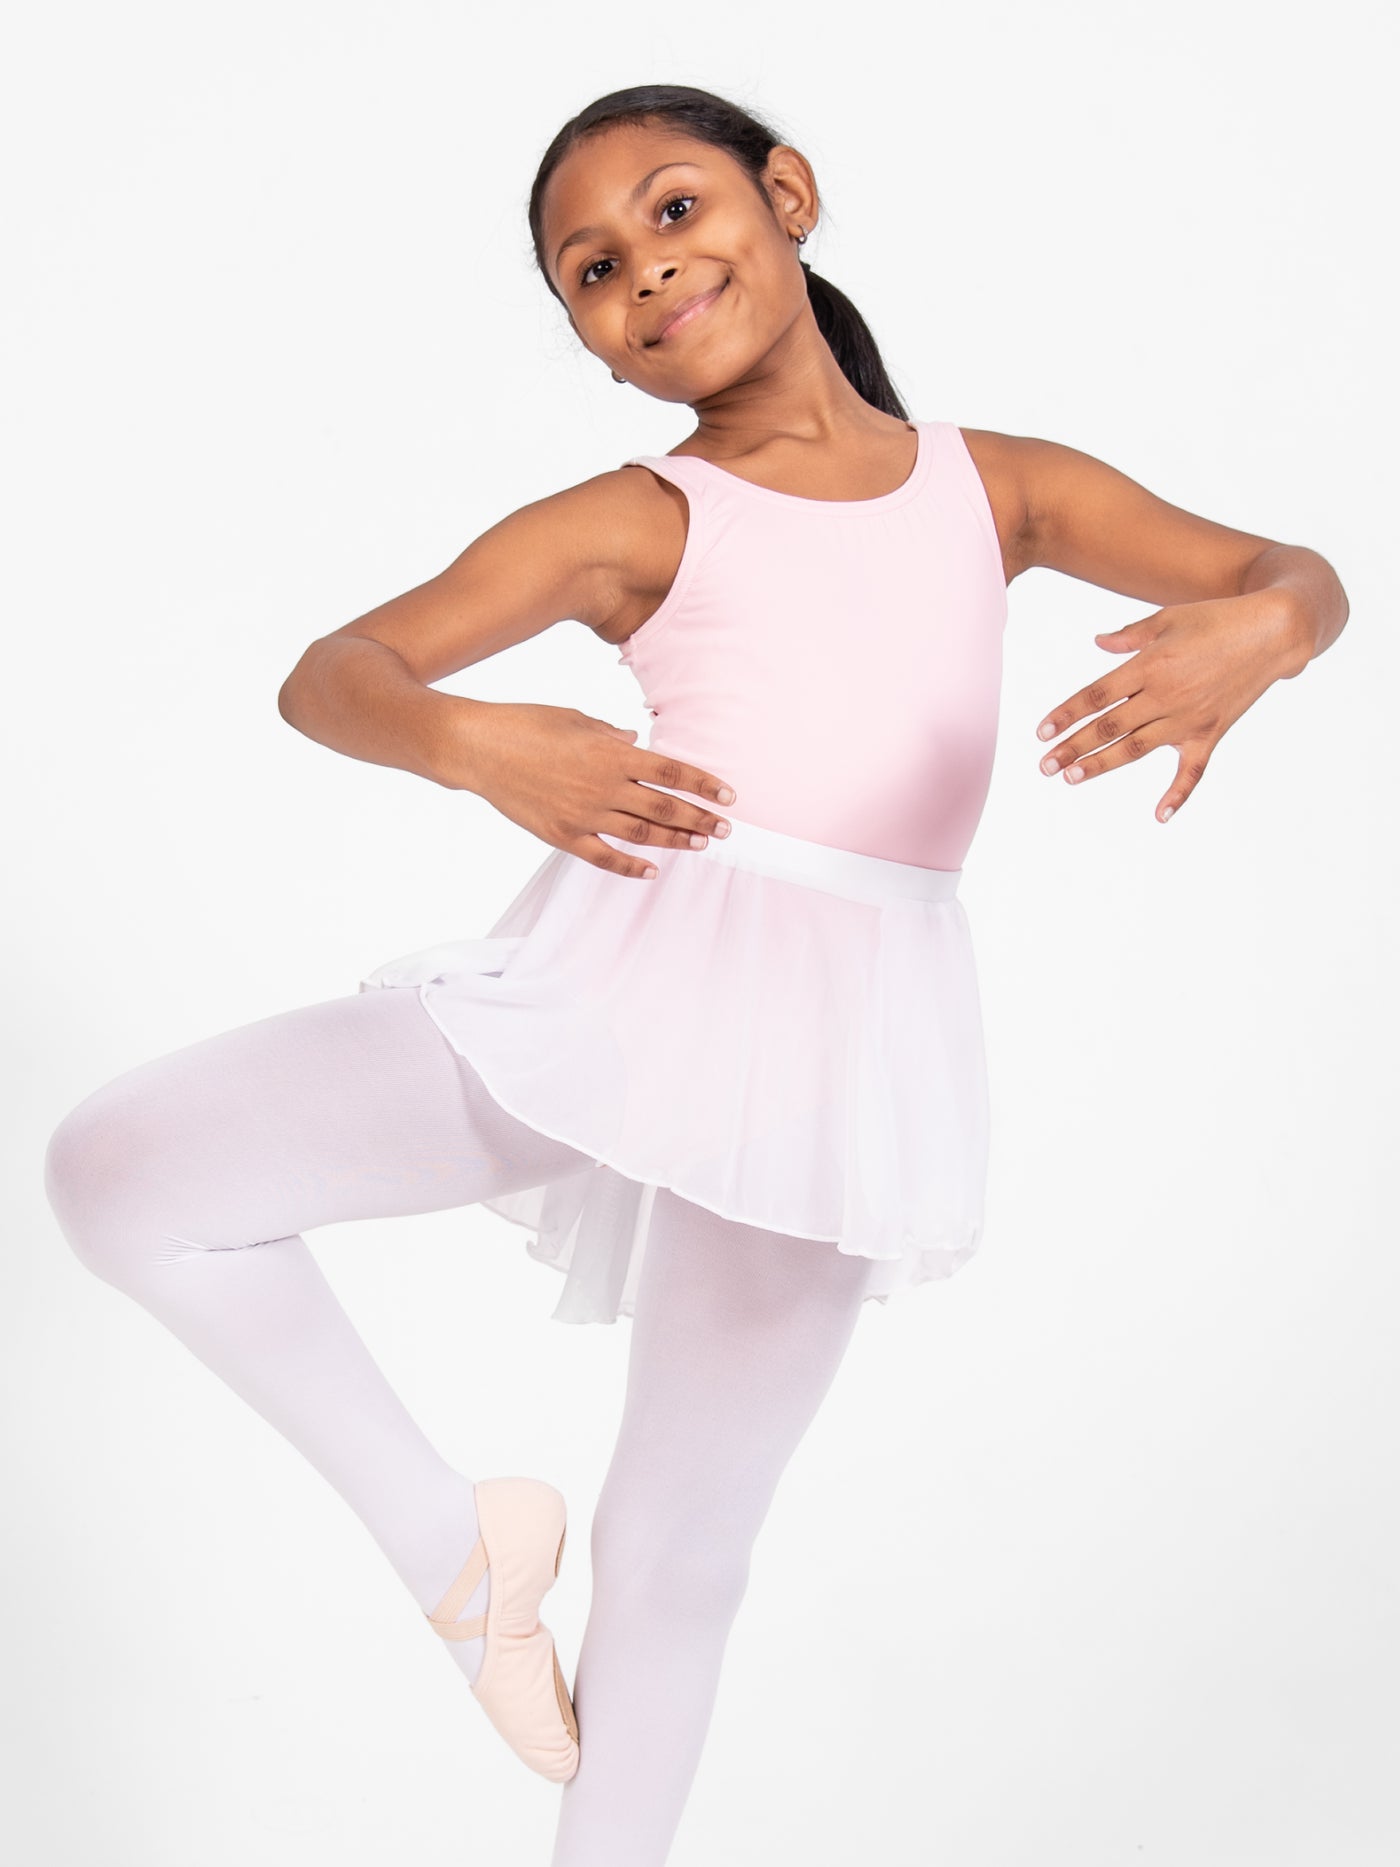 Convertible Ballet Tights BULK 3 PAIRS [1] - $20.90 : Children's DanceWear:  Girls Ballet Shoes, Tights, Leotards, Tutus